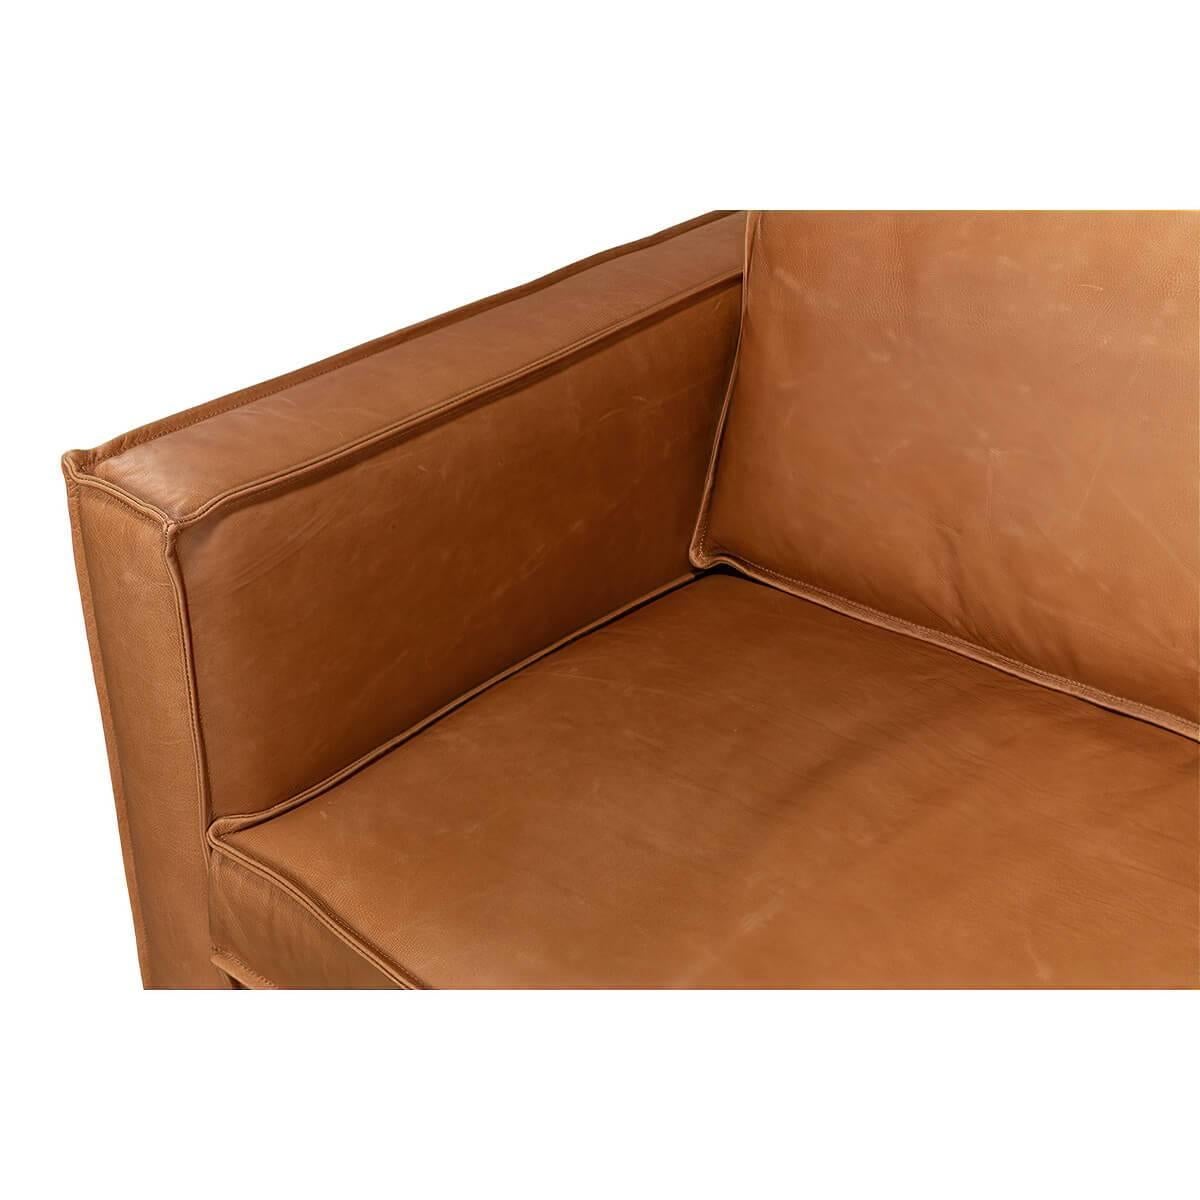 leather sofas on sale